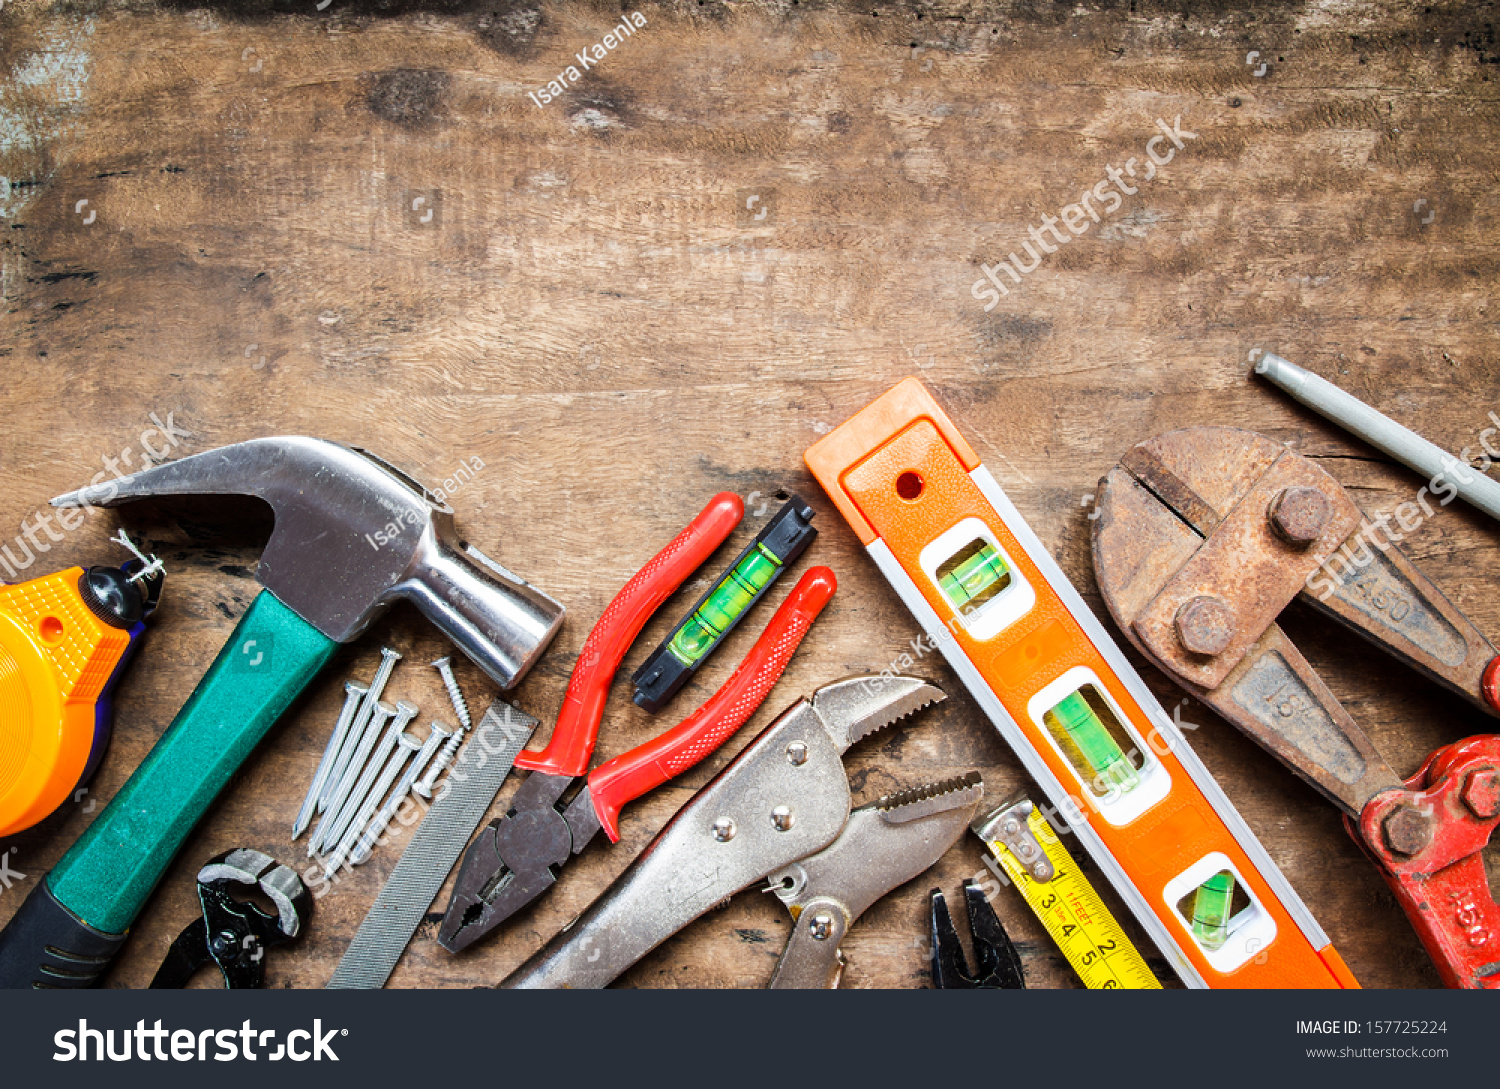 tool renovation on grunge wood #157725224